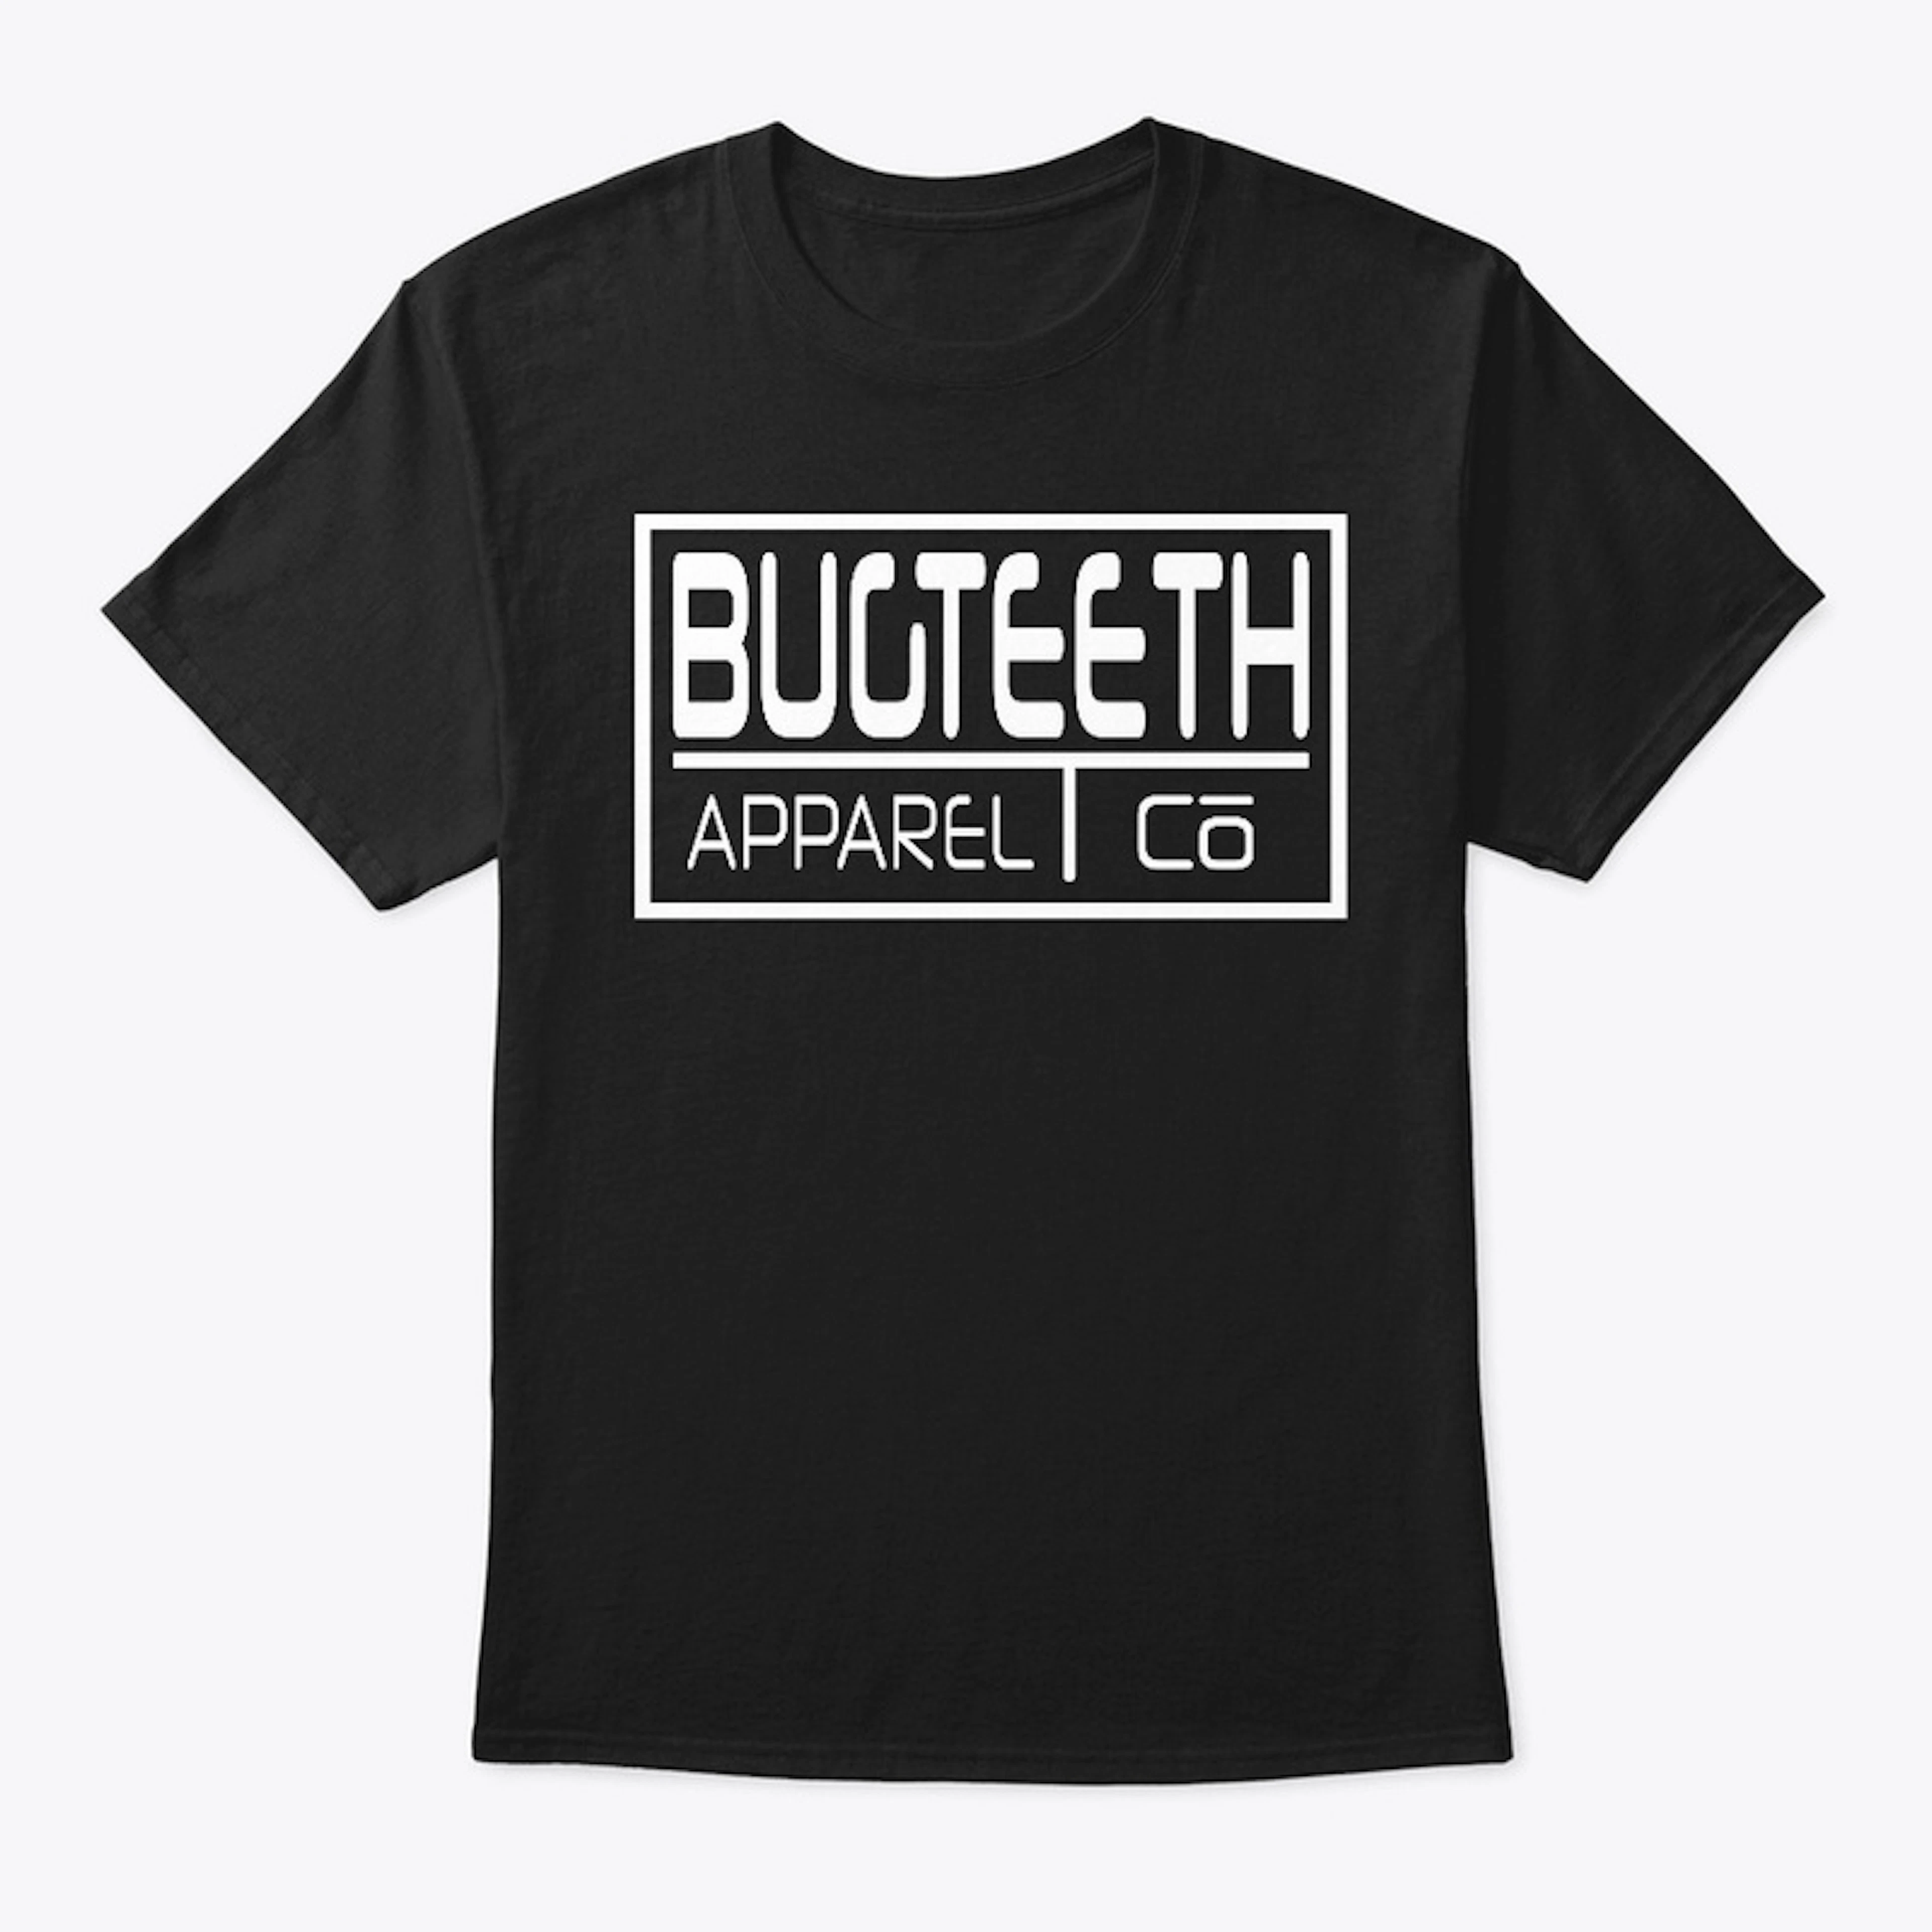 Bugteeth Apparel Company